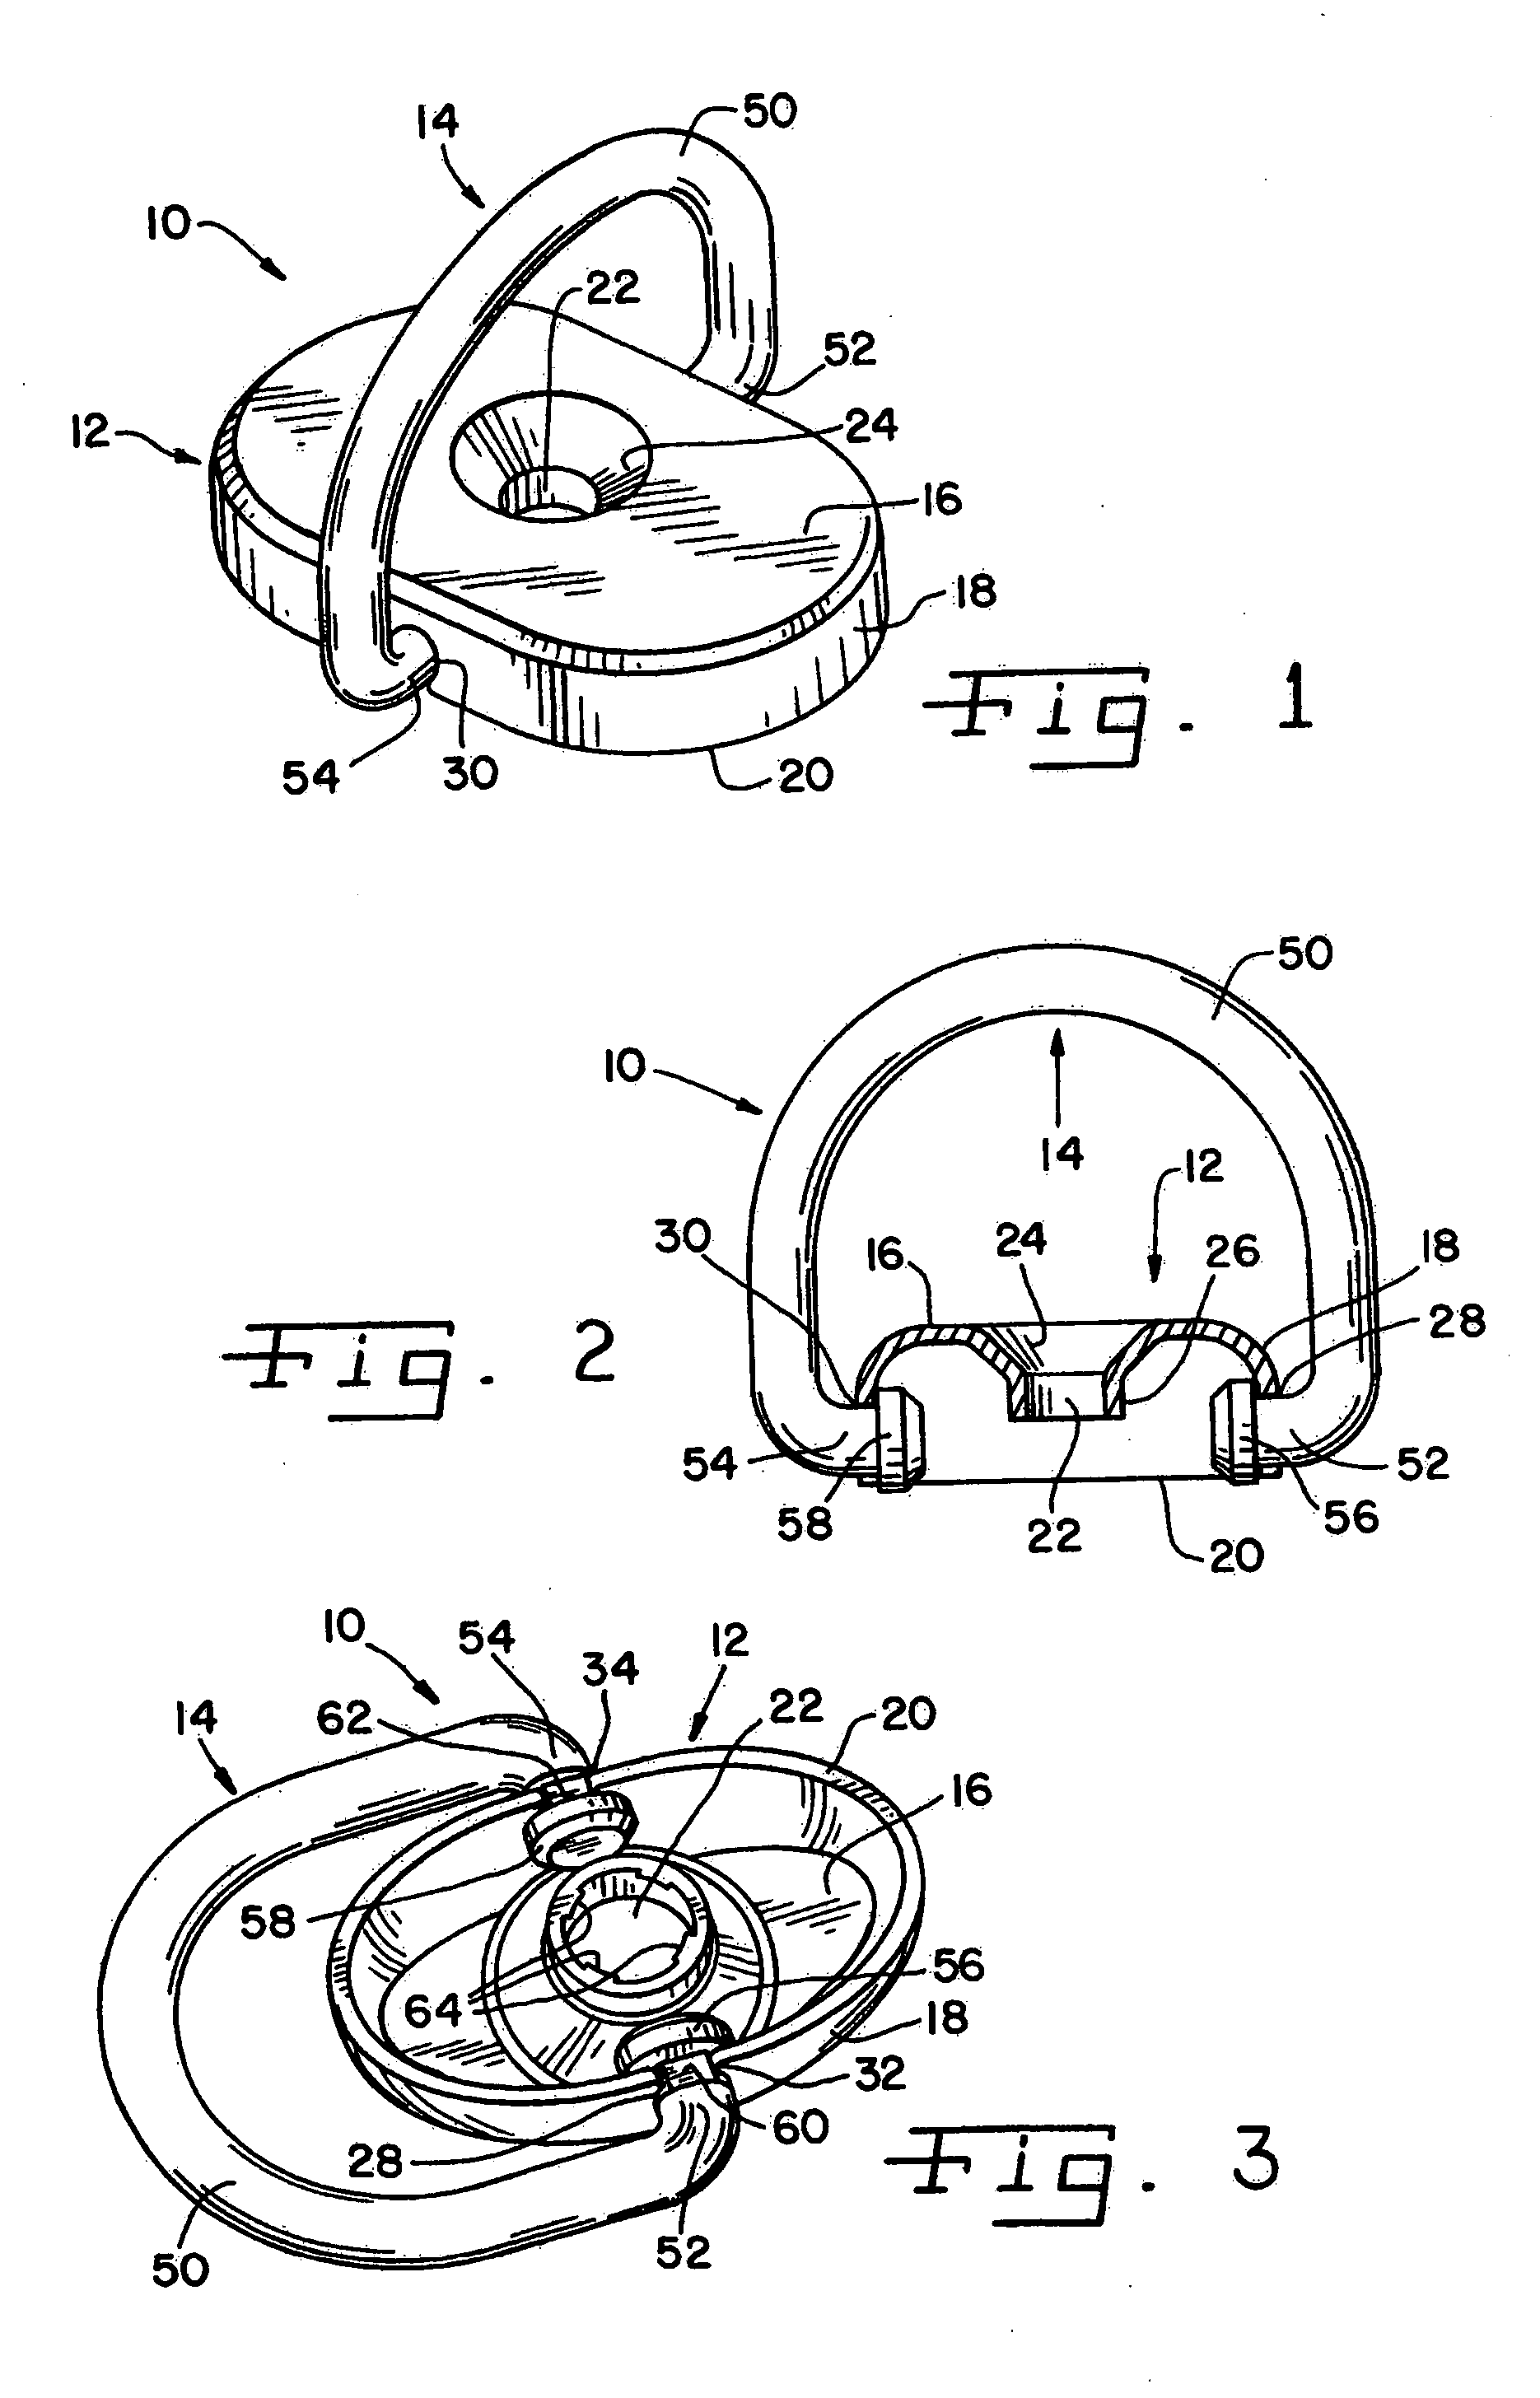 Automotive tether device